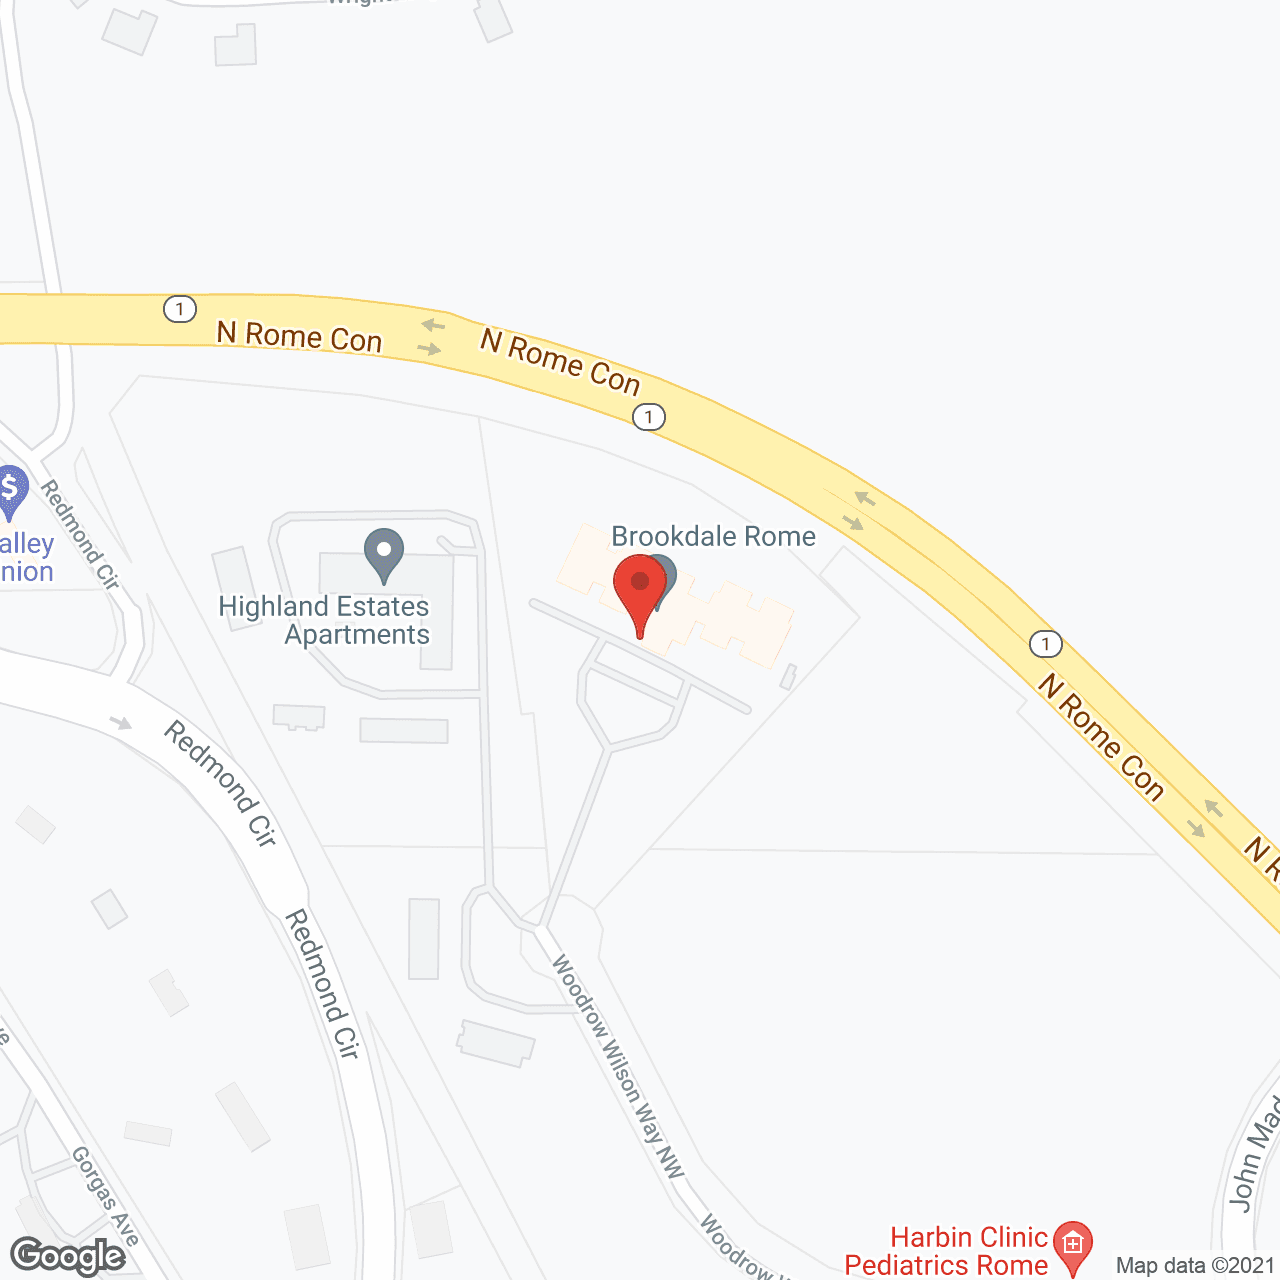 Brookdale Rome in google map